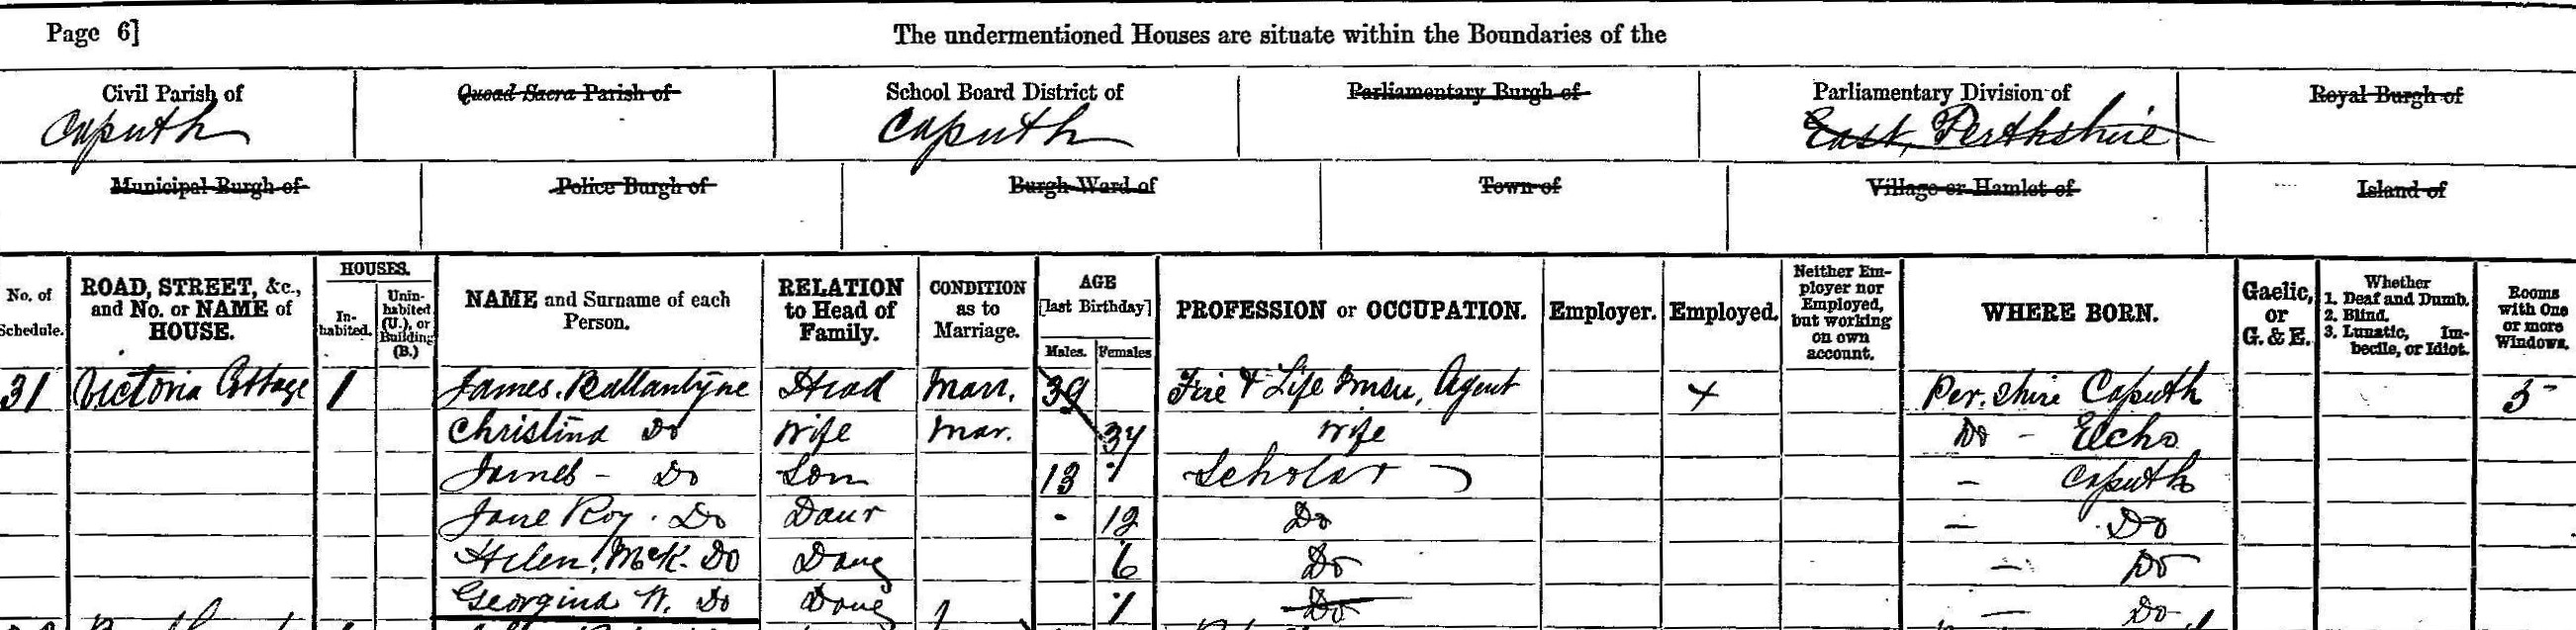 Georgina Ballantine enumerated in the 1891 census